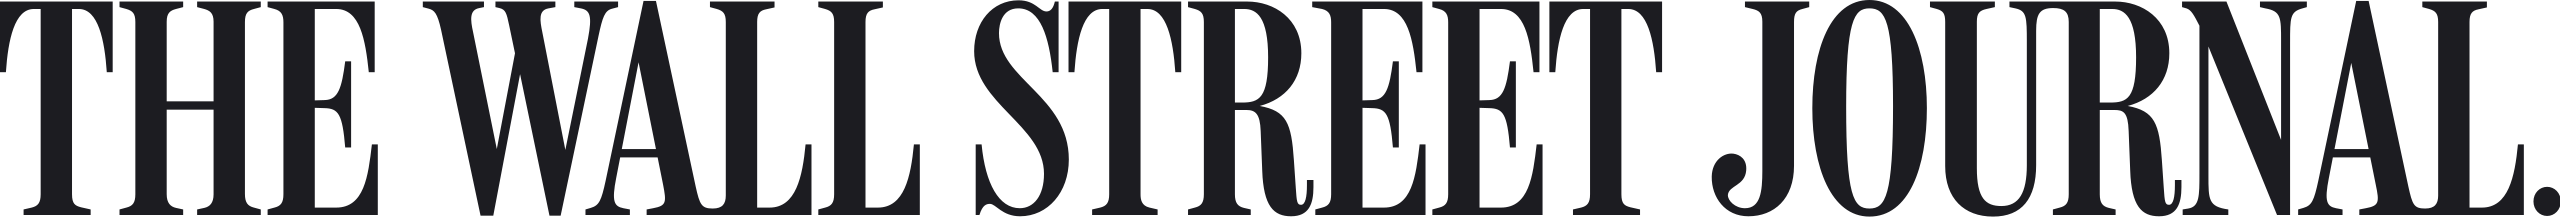 The-Wall-Street-Journal-Press-Logo